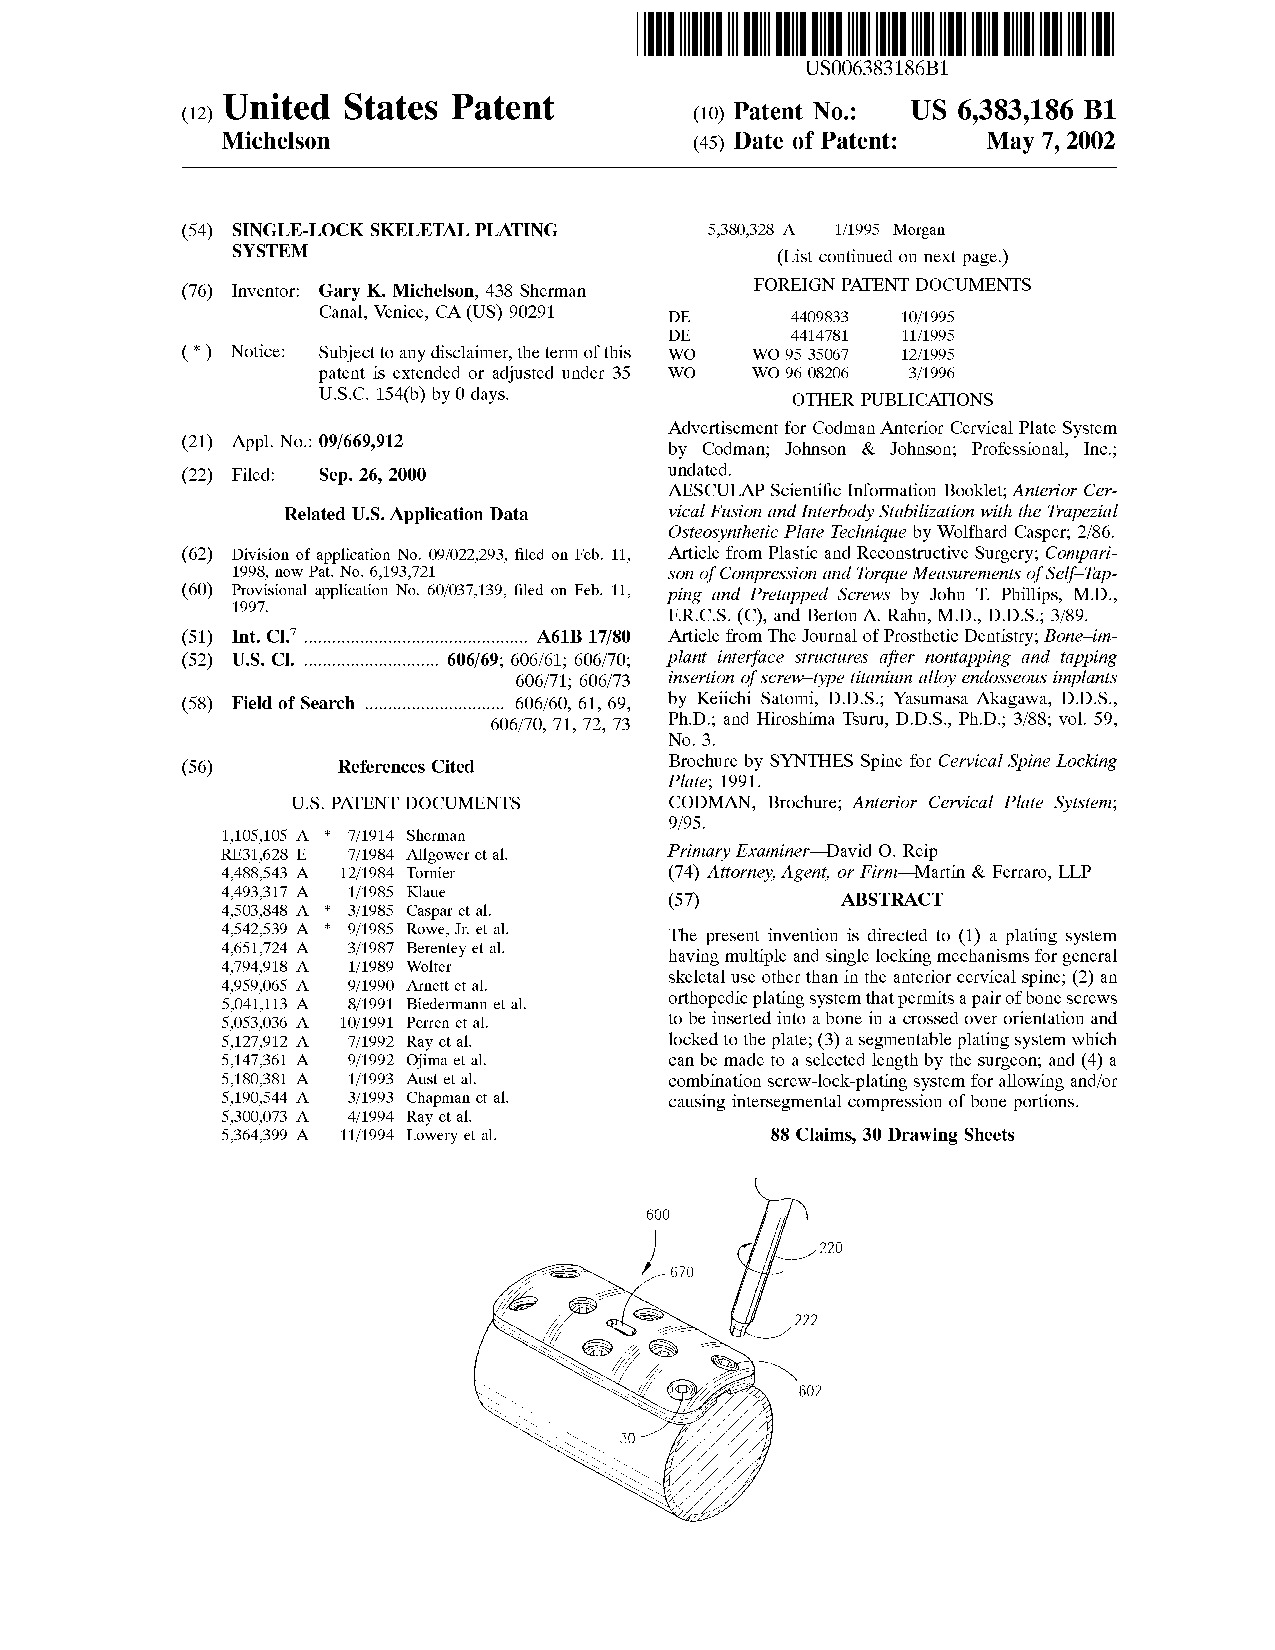 Single-lock skeletal plating system - Patent 6,383,186